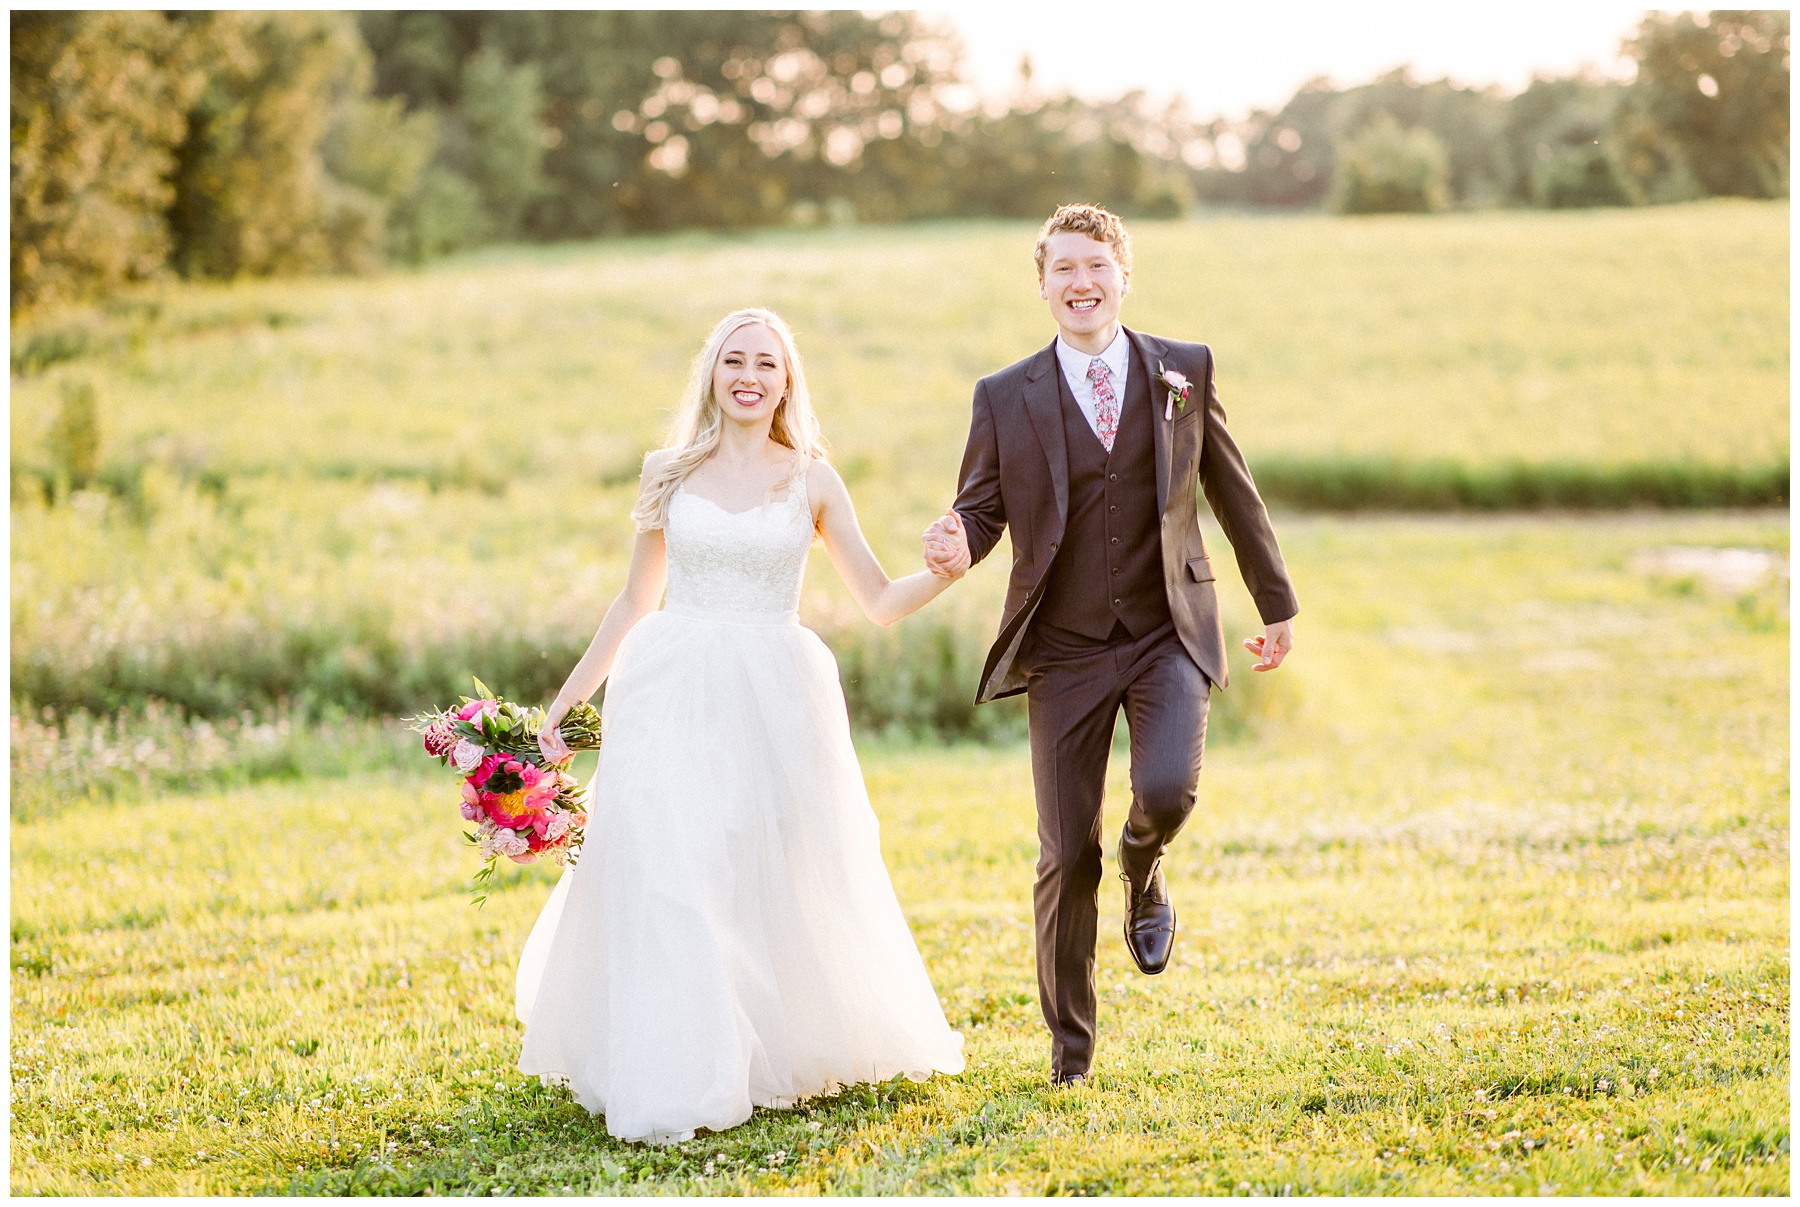 Magnolia Hill Farm Wedding in Columbus Ohio. Amanda Eloise Photography